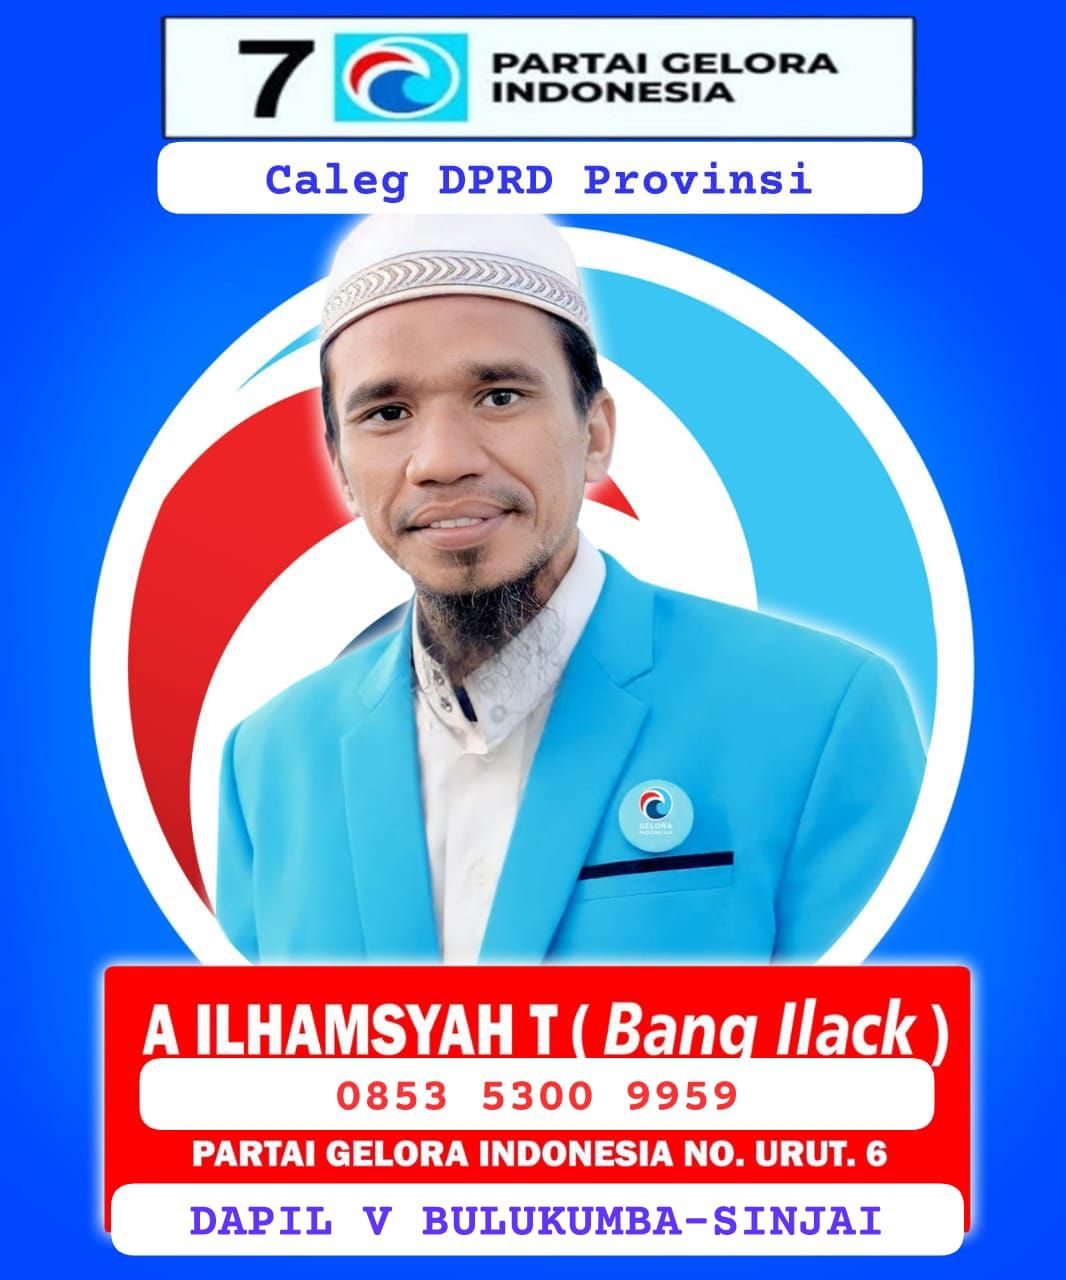 Caleg DPRD Sulsel Dapil 5 Bulukumba-Sinjai: Gerakan 'Parlemen Santri' bersama Ustad Ilhamsyah/WartaBulukumba.Com.